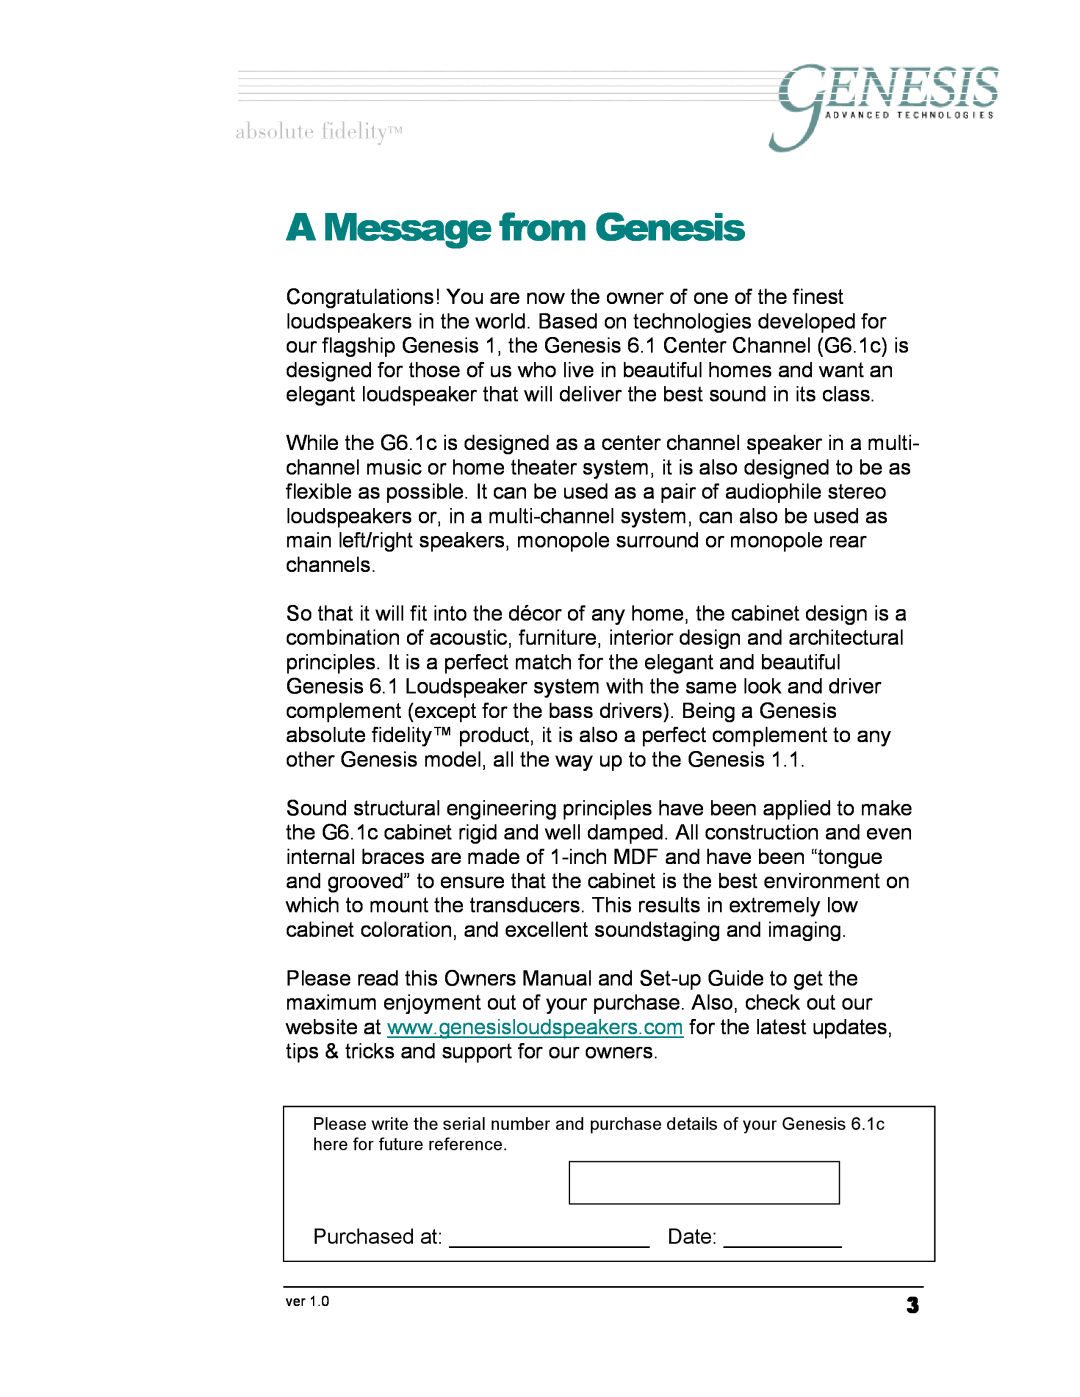 Genesis Advanced Technologies G6.1c owner manual A Message from Genesis, ~ÄëçäìíÉ=ÑáÇÉäáíó 